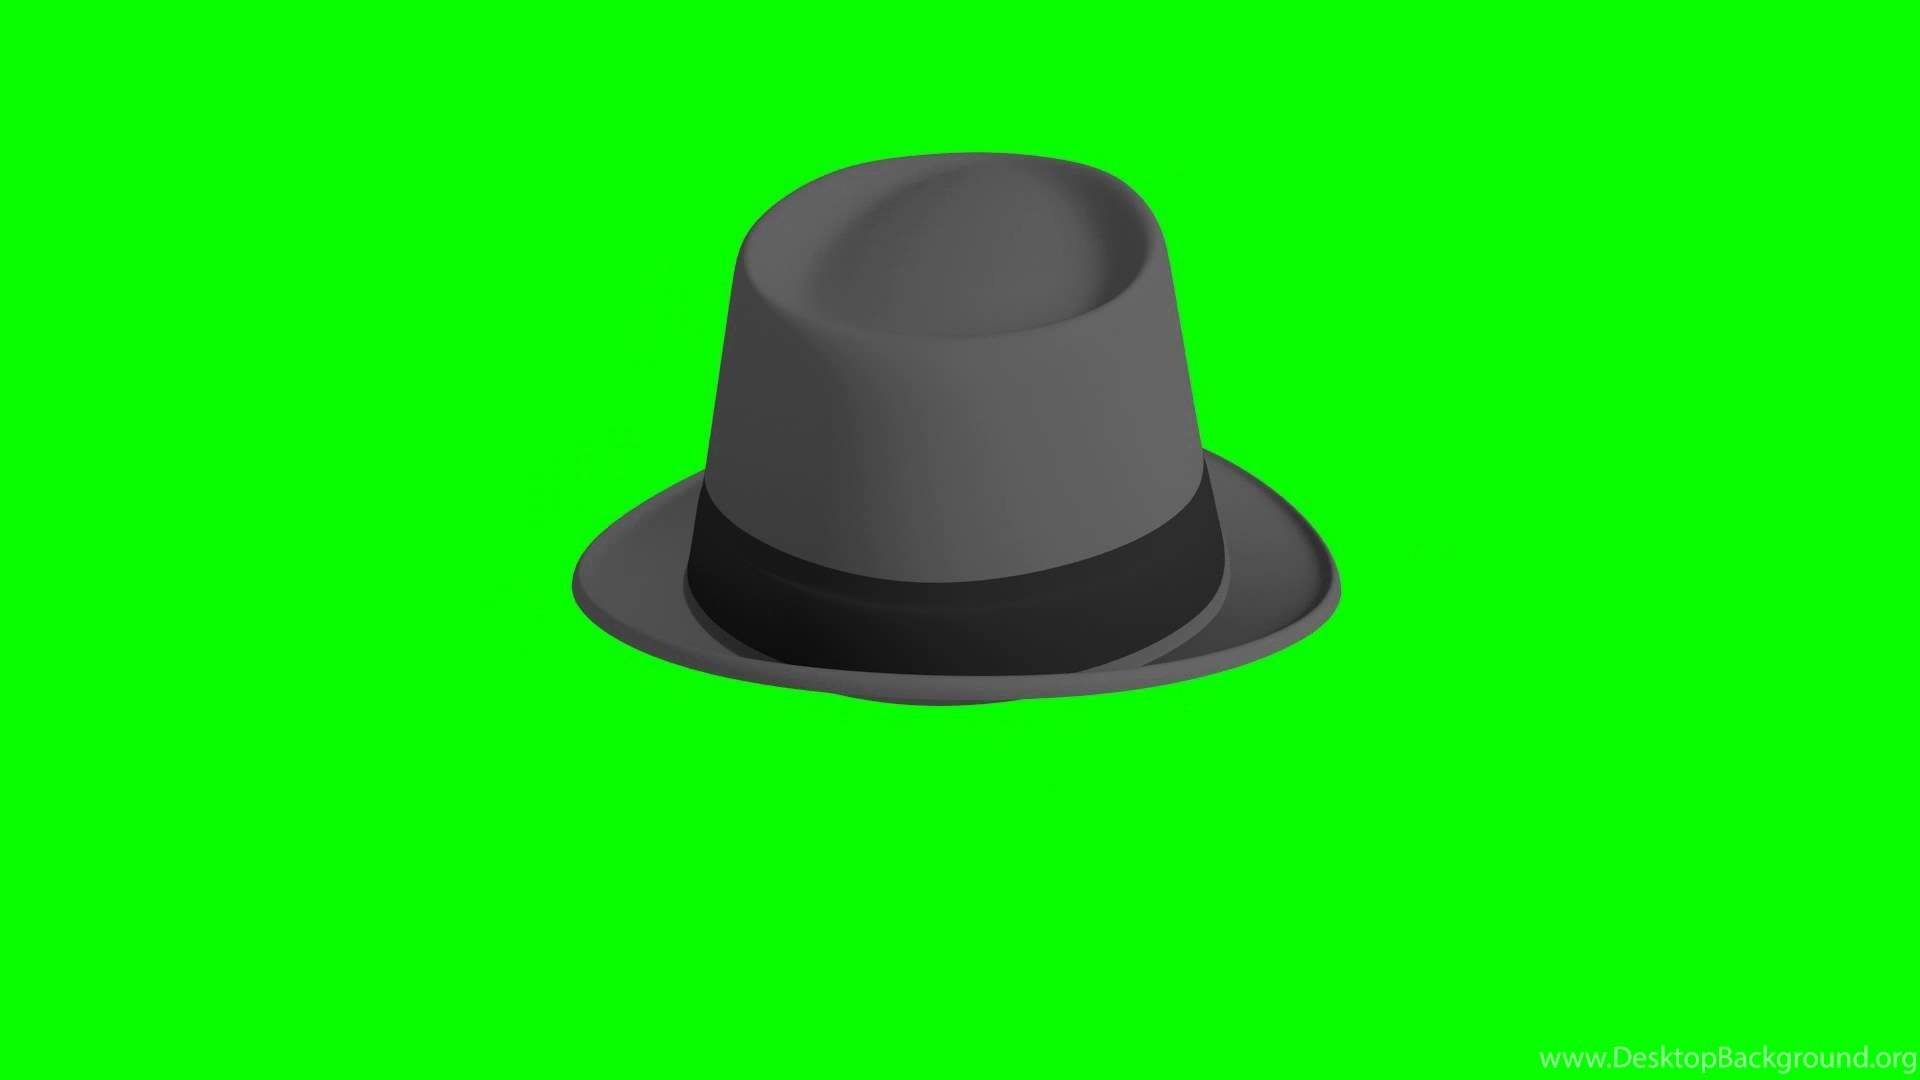 Hat video. Шлеппа на зелёном фоне. Шляпа на зеленом фоне. Шляпка на зелёном фоне. Шляпа хромакей.